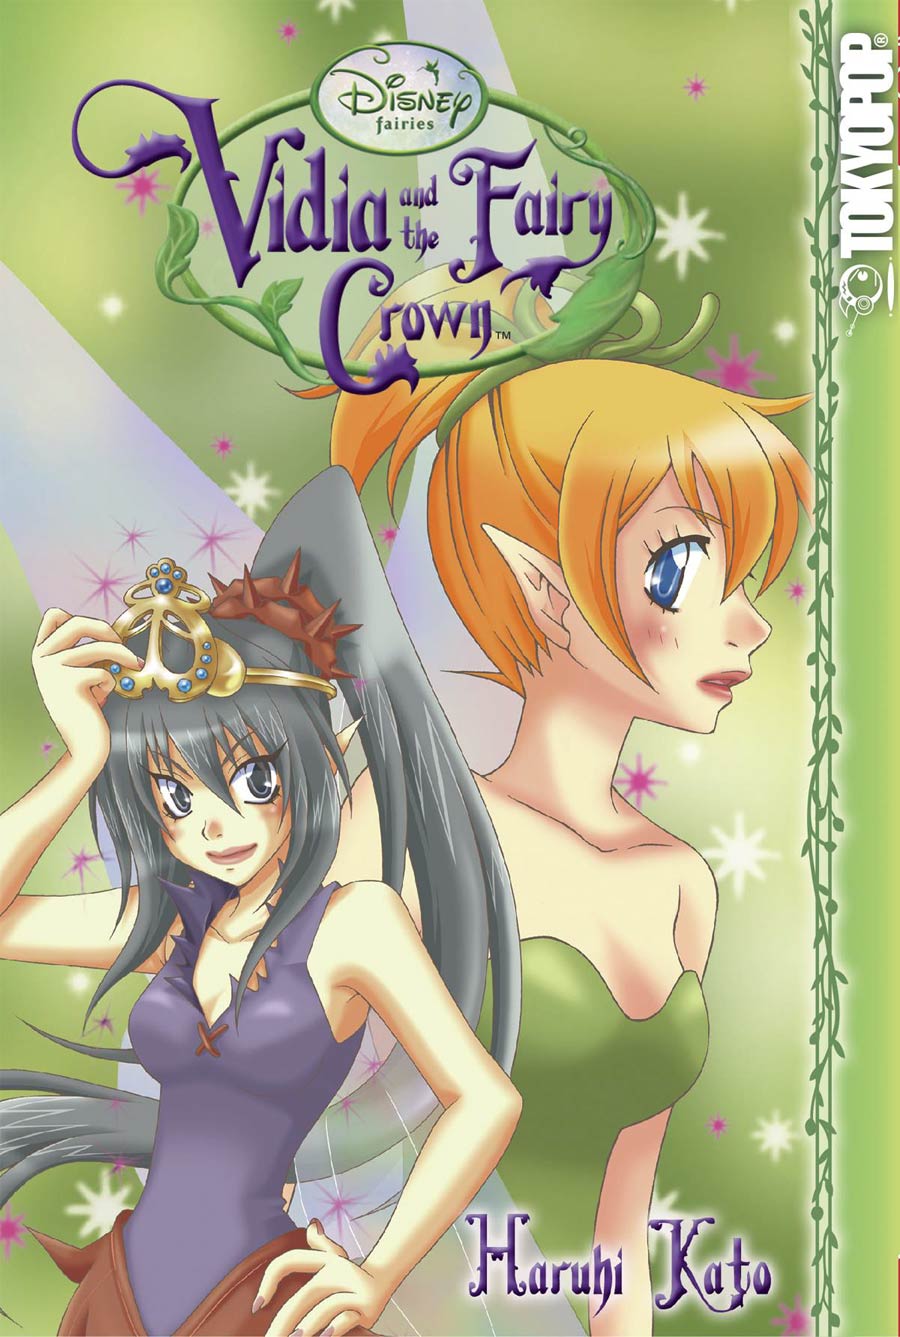 Disney Fairies Manga Vidia And The Fairy Crown GN